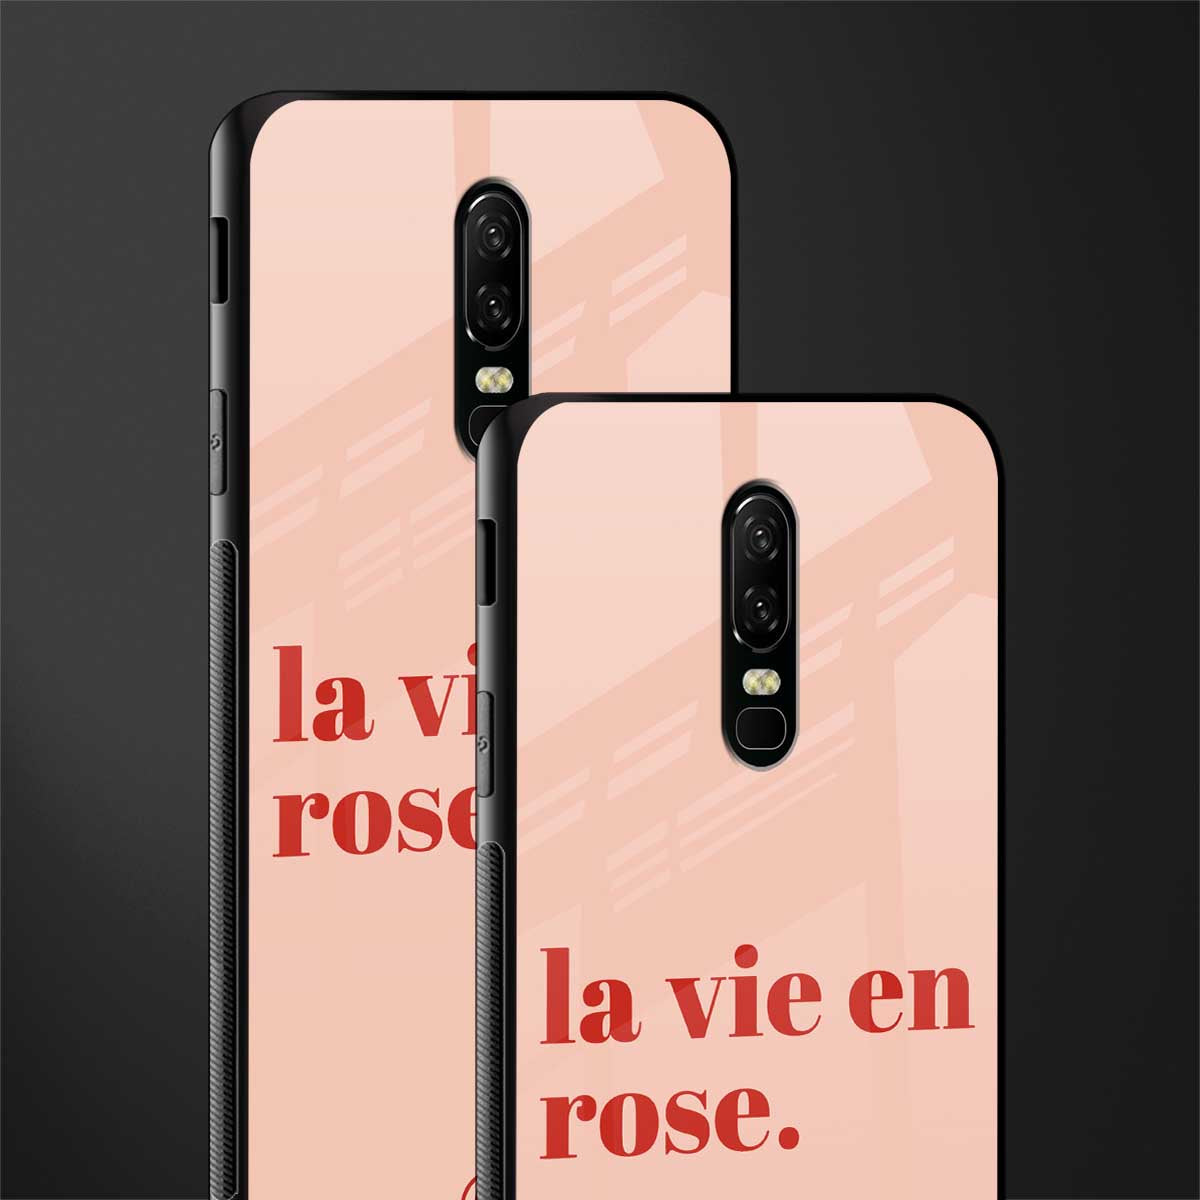 la vie en rose quote glass case for oneplus 6 image-2